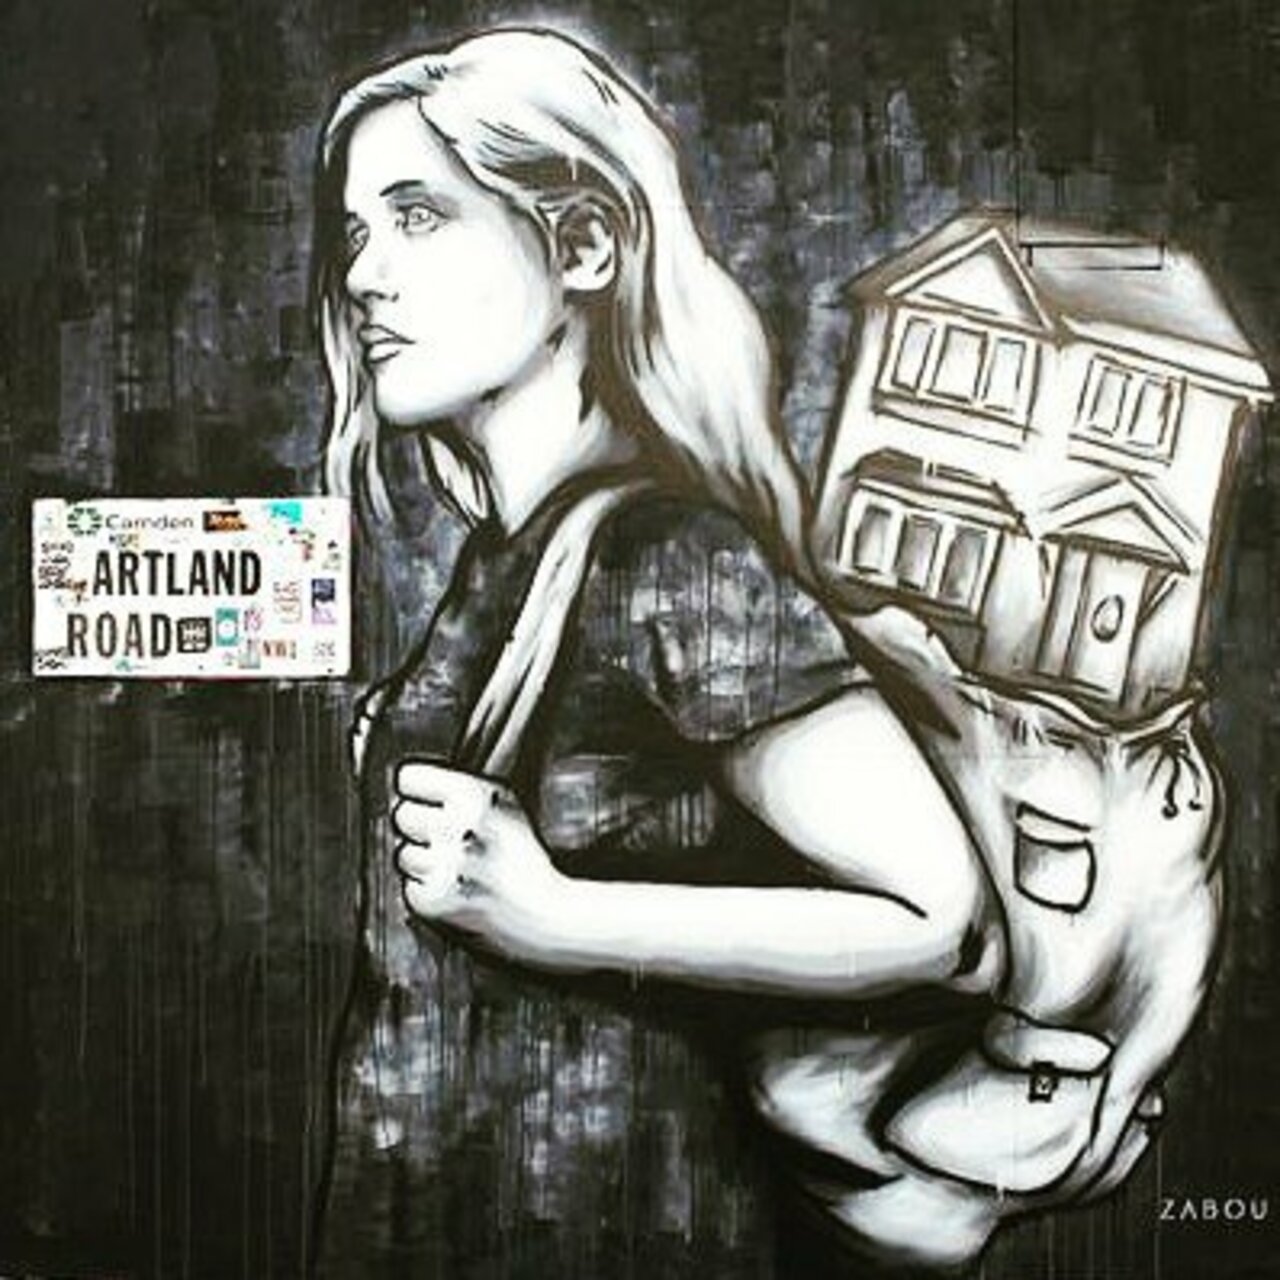 #zabouartist #streetart #art #graffiti #wallart #urbanart #zabou #londonstreetart #paris #streetartlondon #streetar… https://t.co/aAwr73czjr